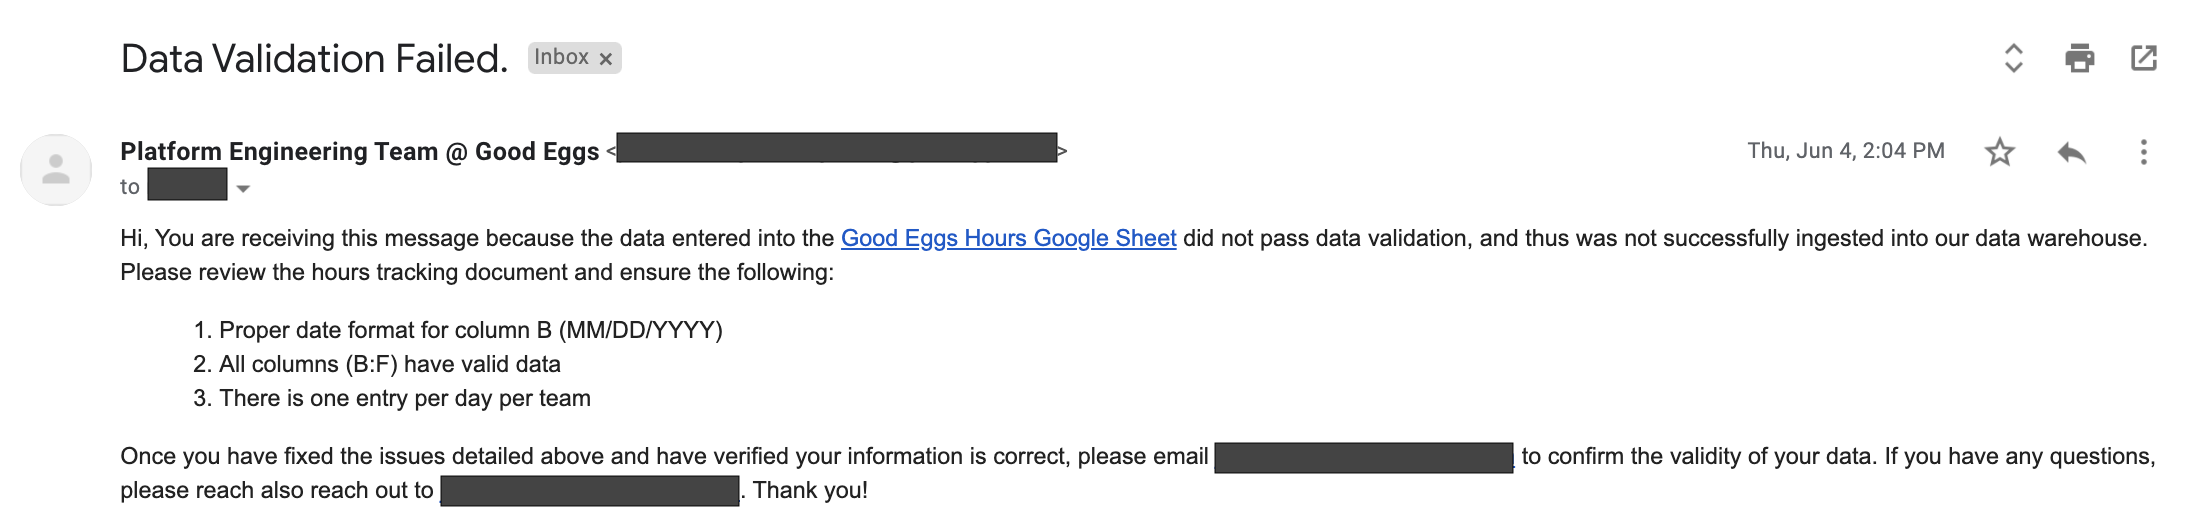 Good Eggs Validation Failure Email